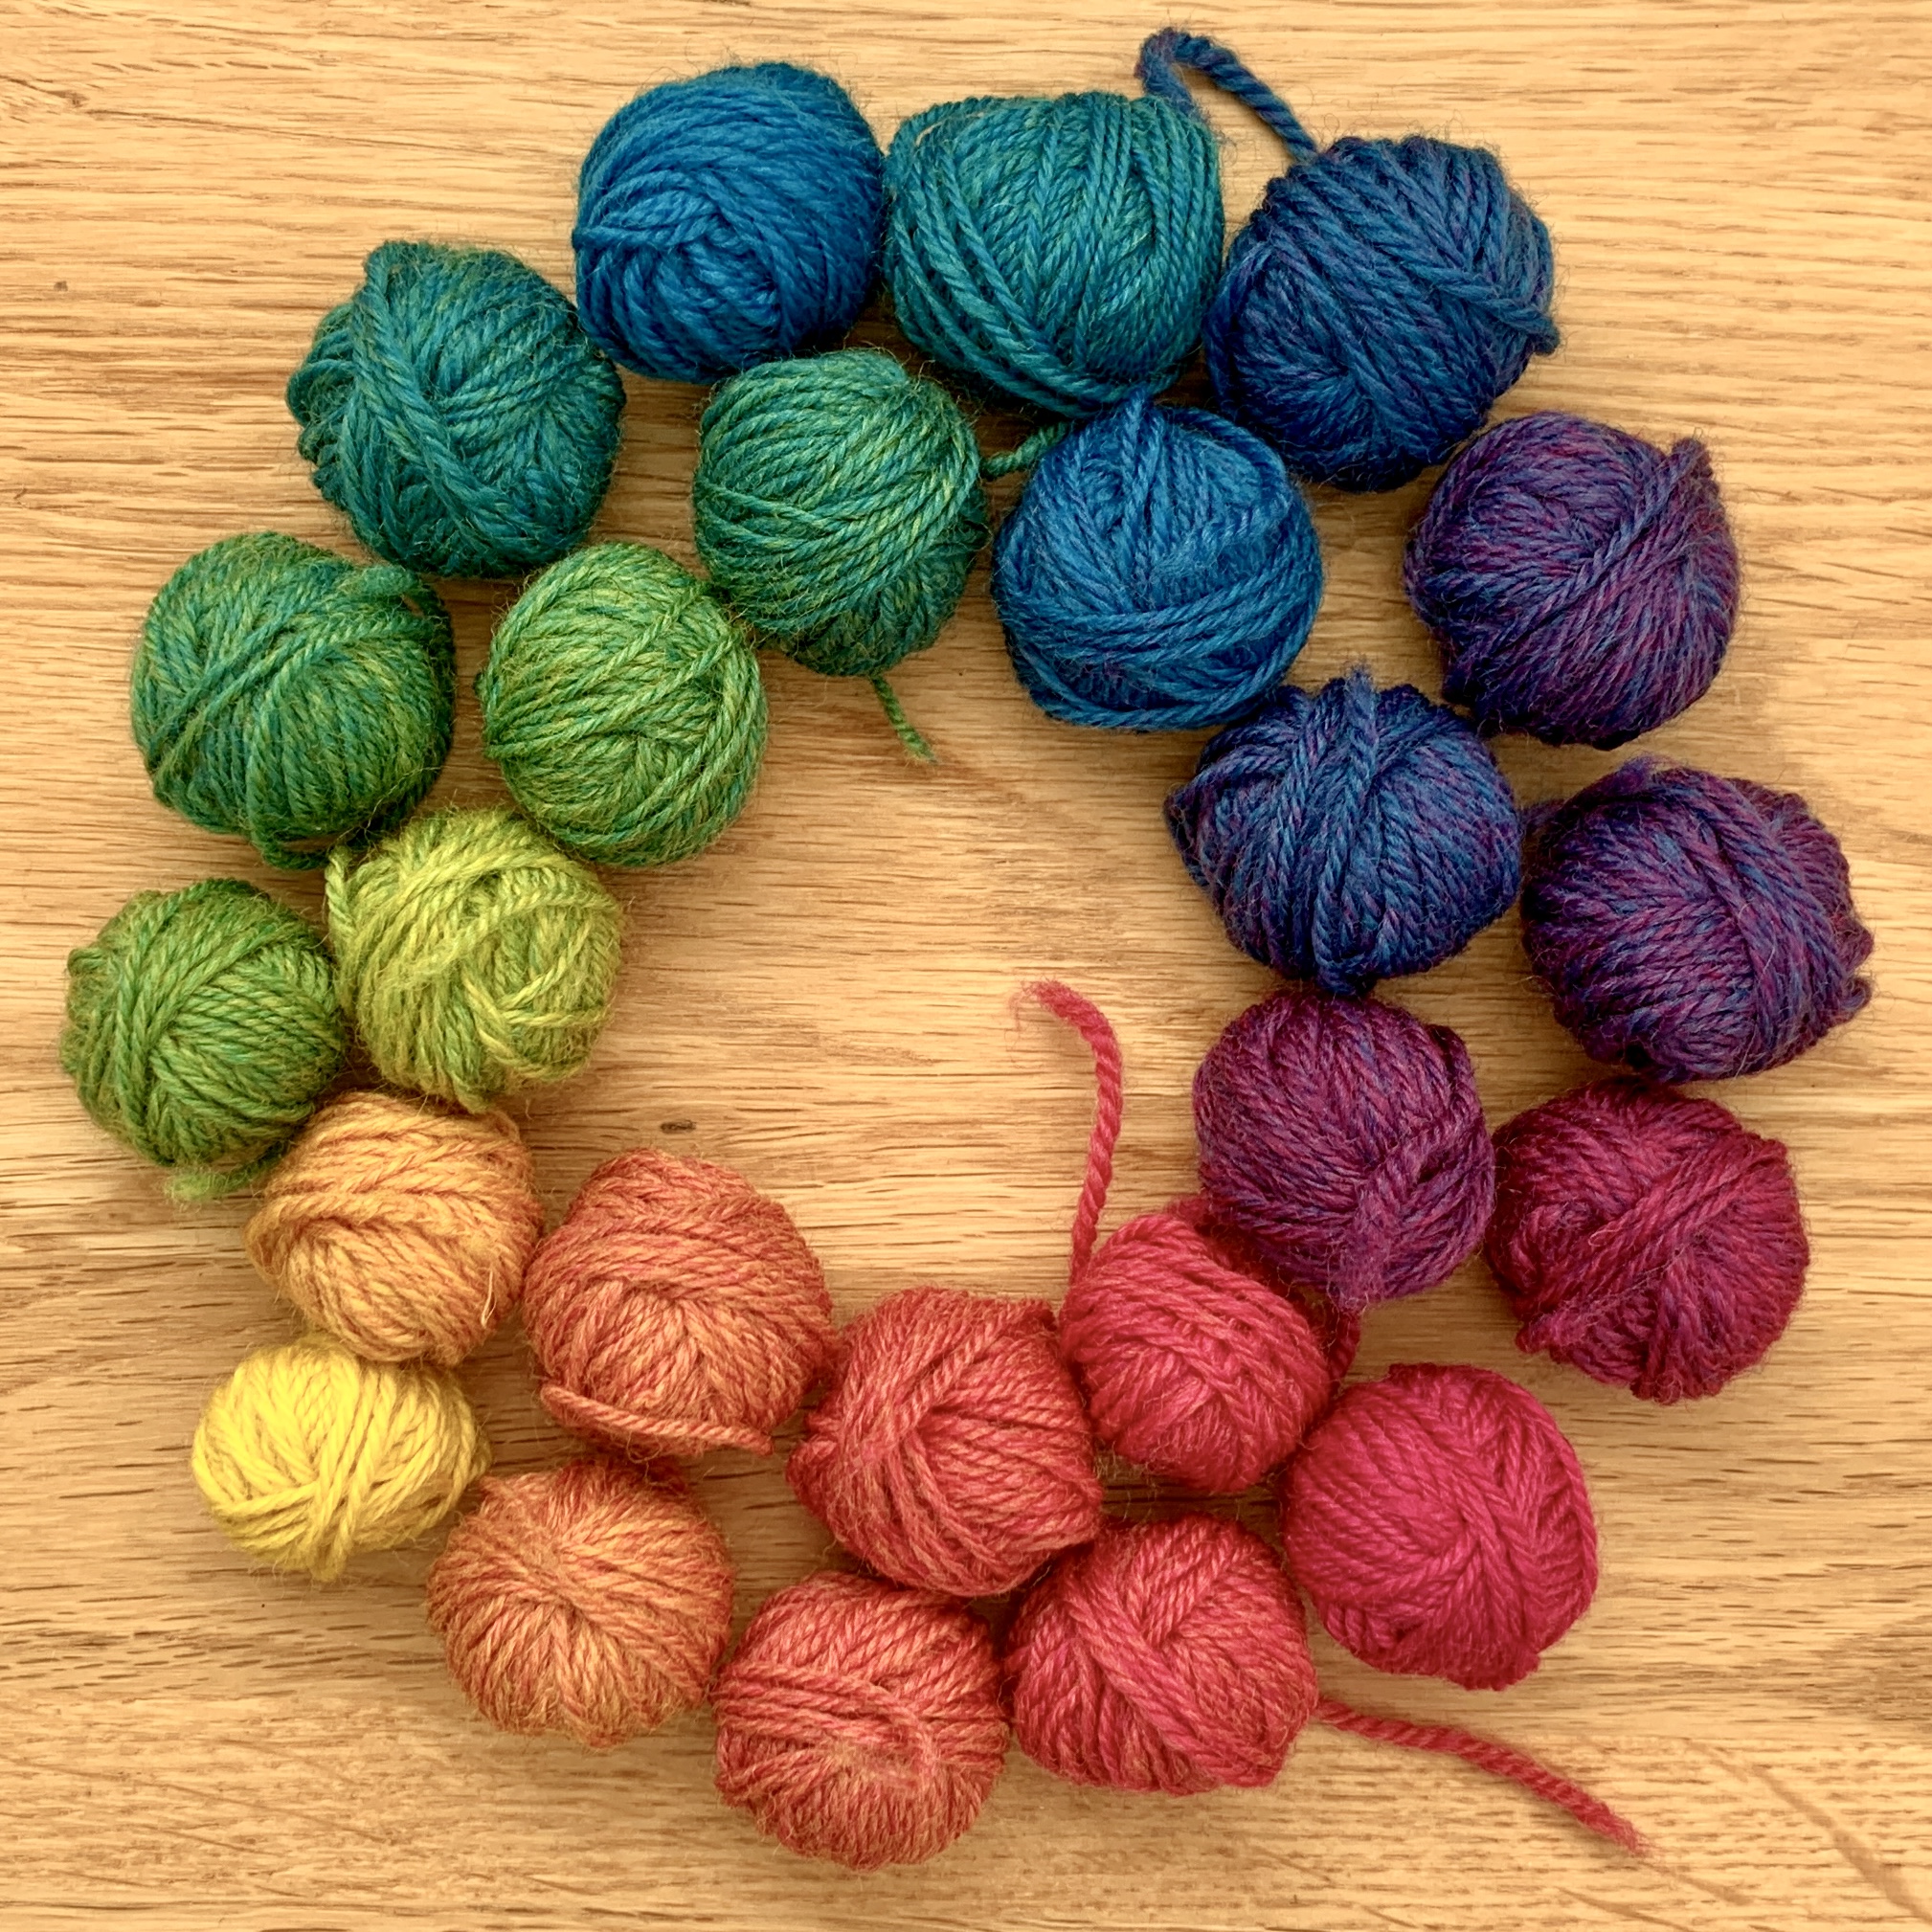 Craft me Happy!: Knitted Bouclé Stitch